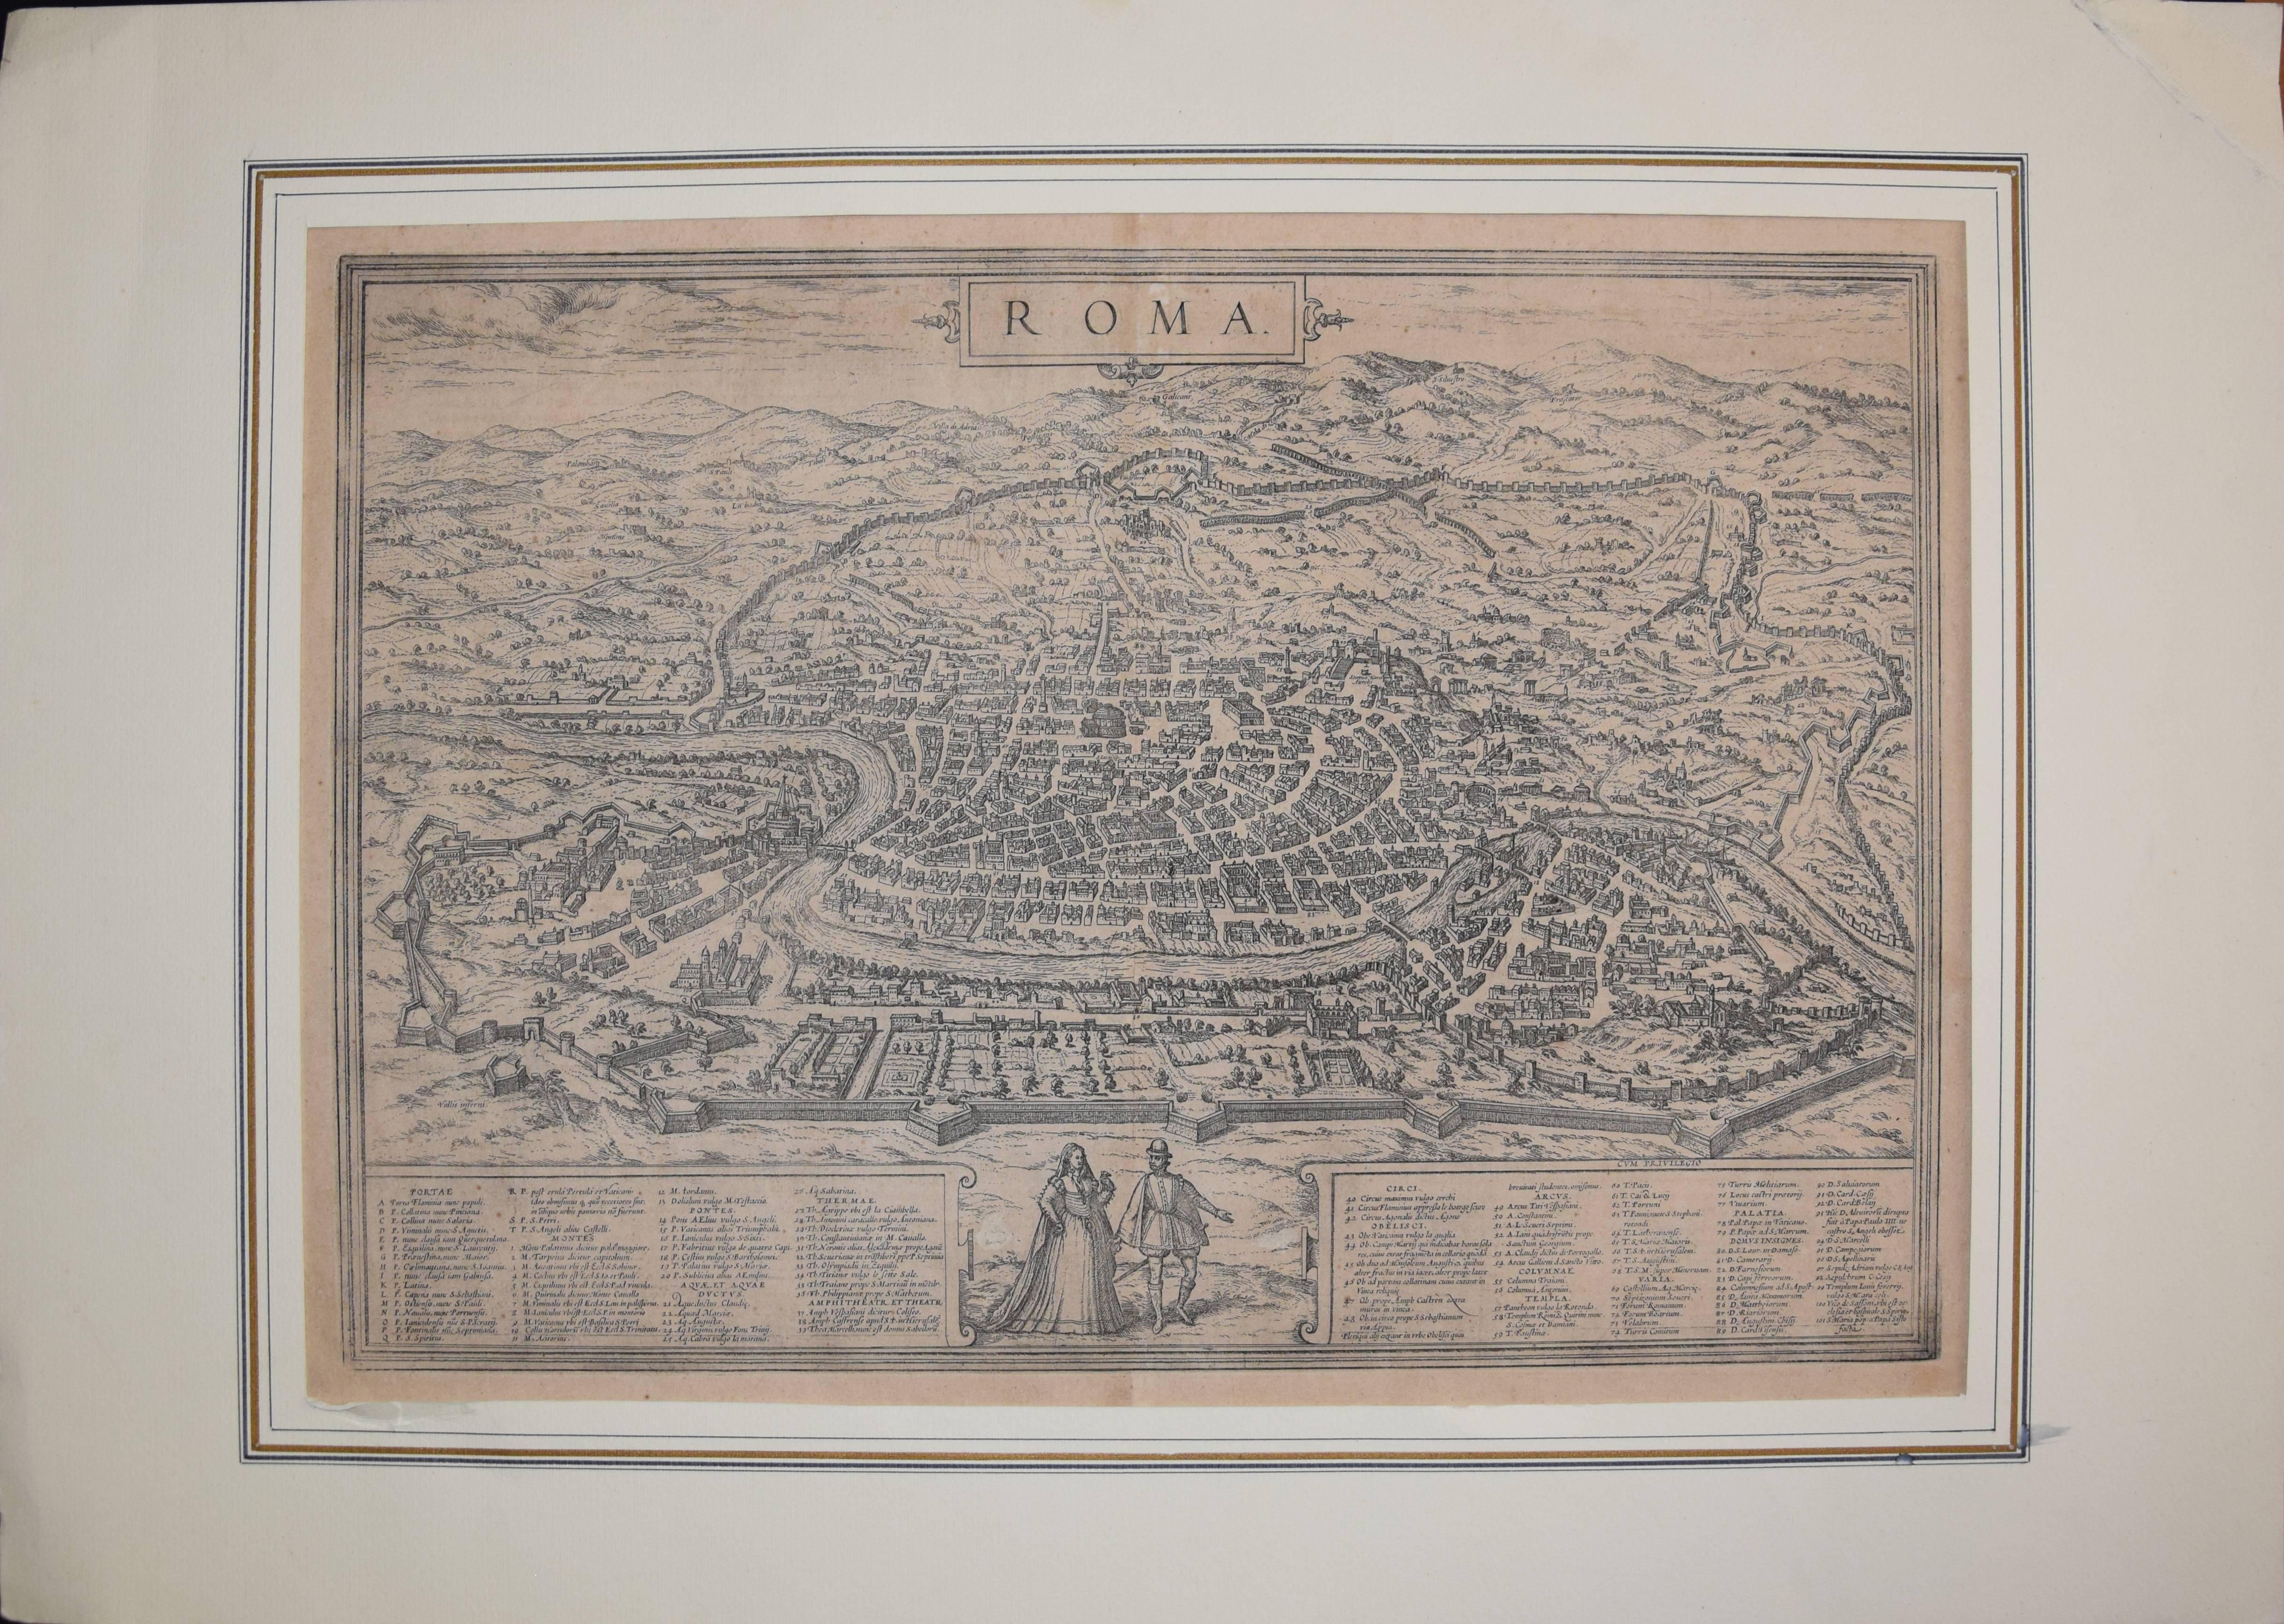 Frans Hogenberg Landscape Print - Rome /Roma Antique Map, Civitates Orbis Terrarum by Braun and Hogenberg